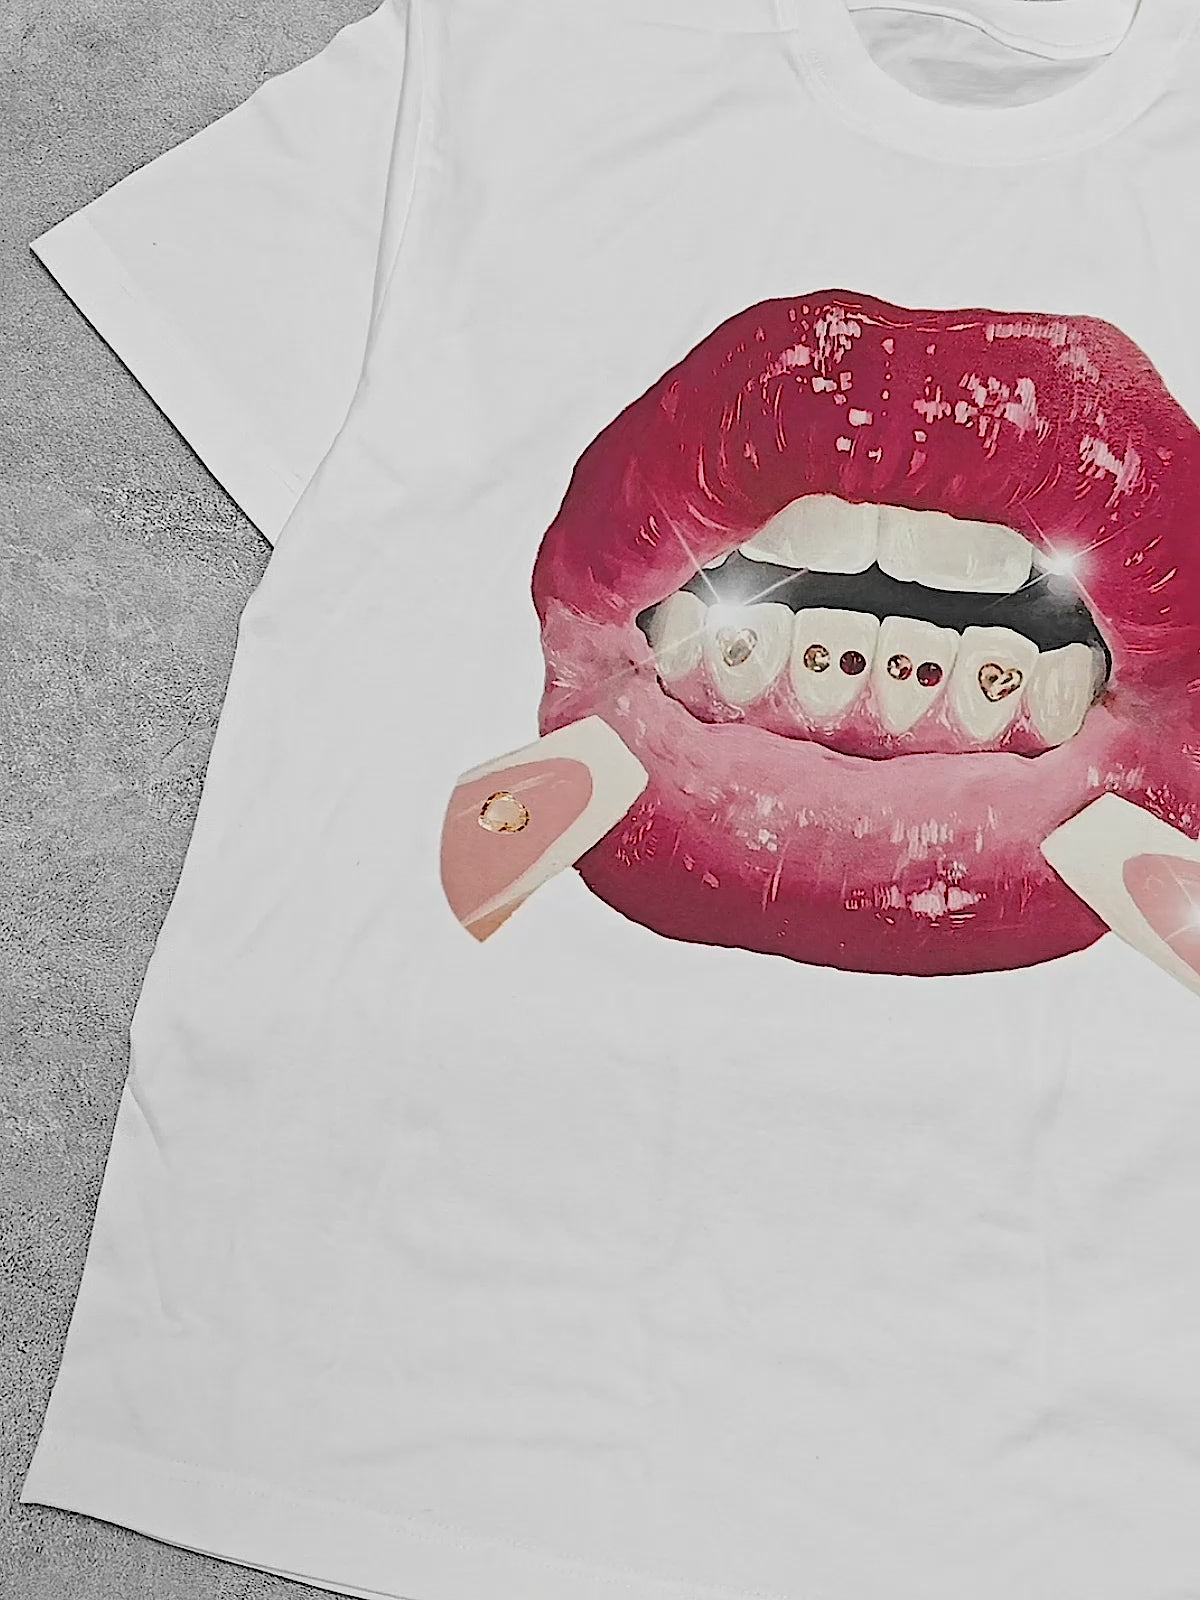 BOUNCE BACK© Red Lips Print T-Shirt